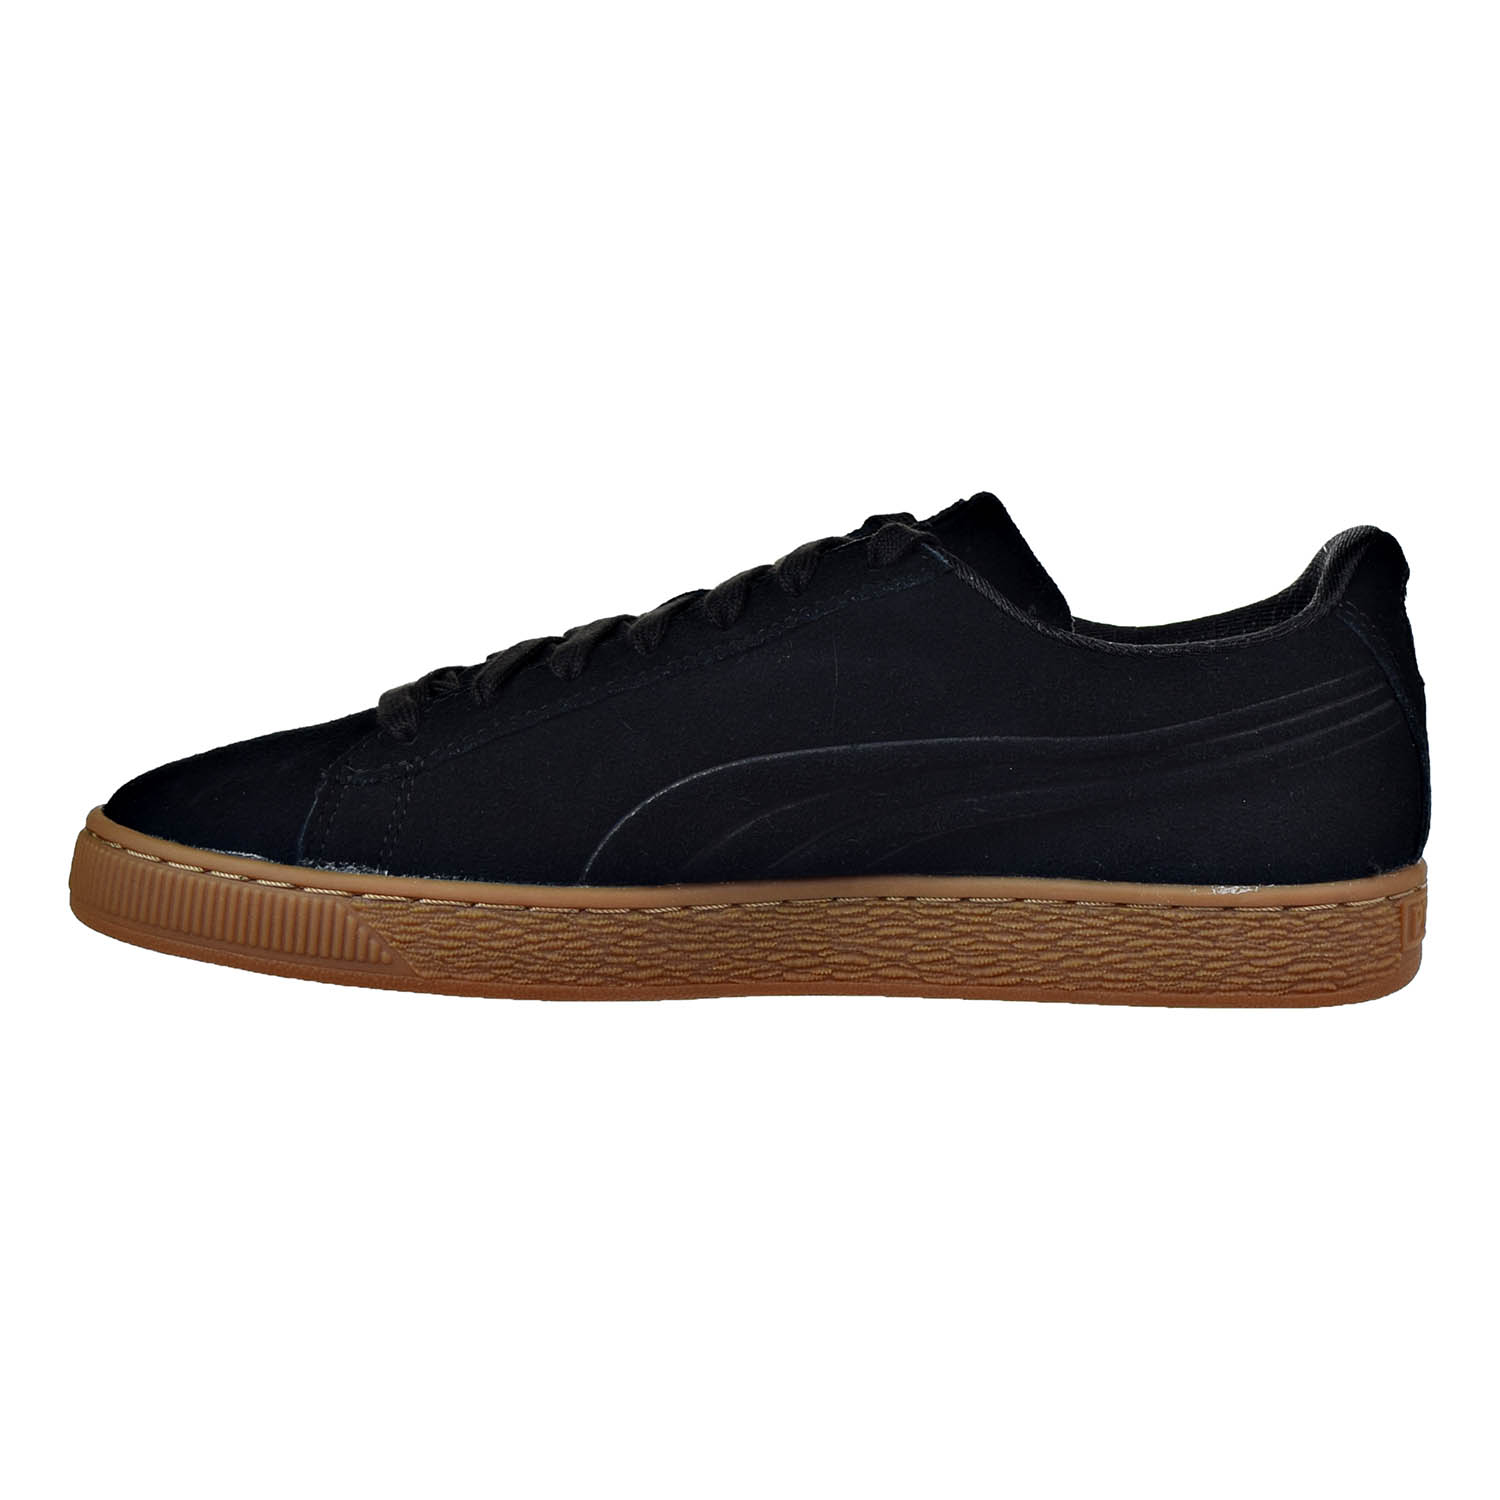 Puma Suede Classic Debossed Q4 Men's Shoes Puma Black/Glacier Grey 361098-02 - image 4 of 6